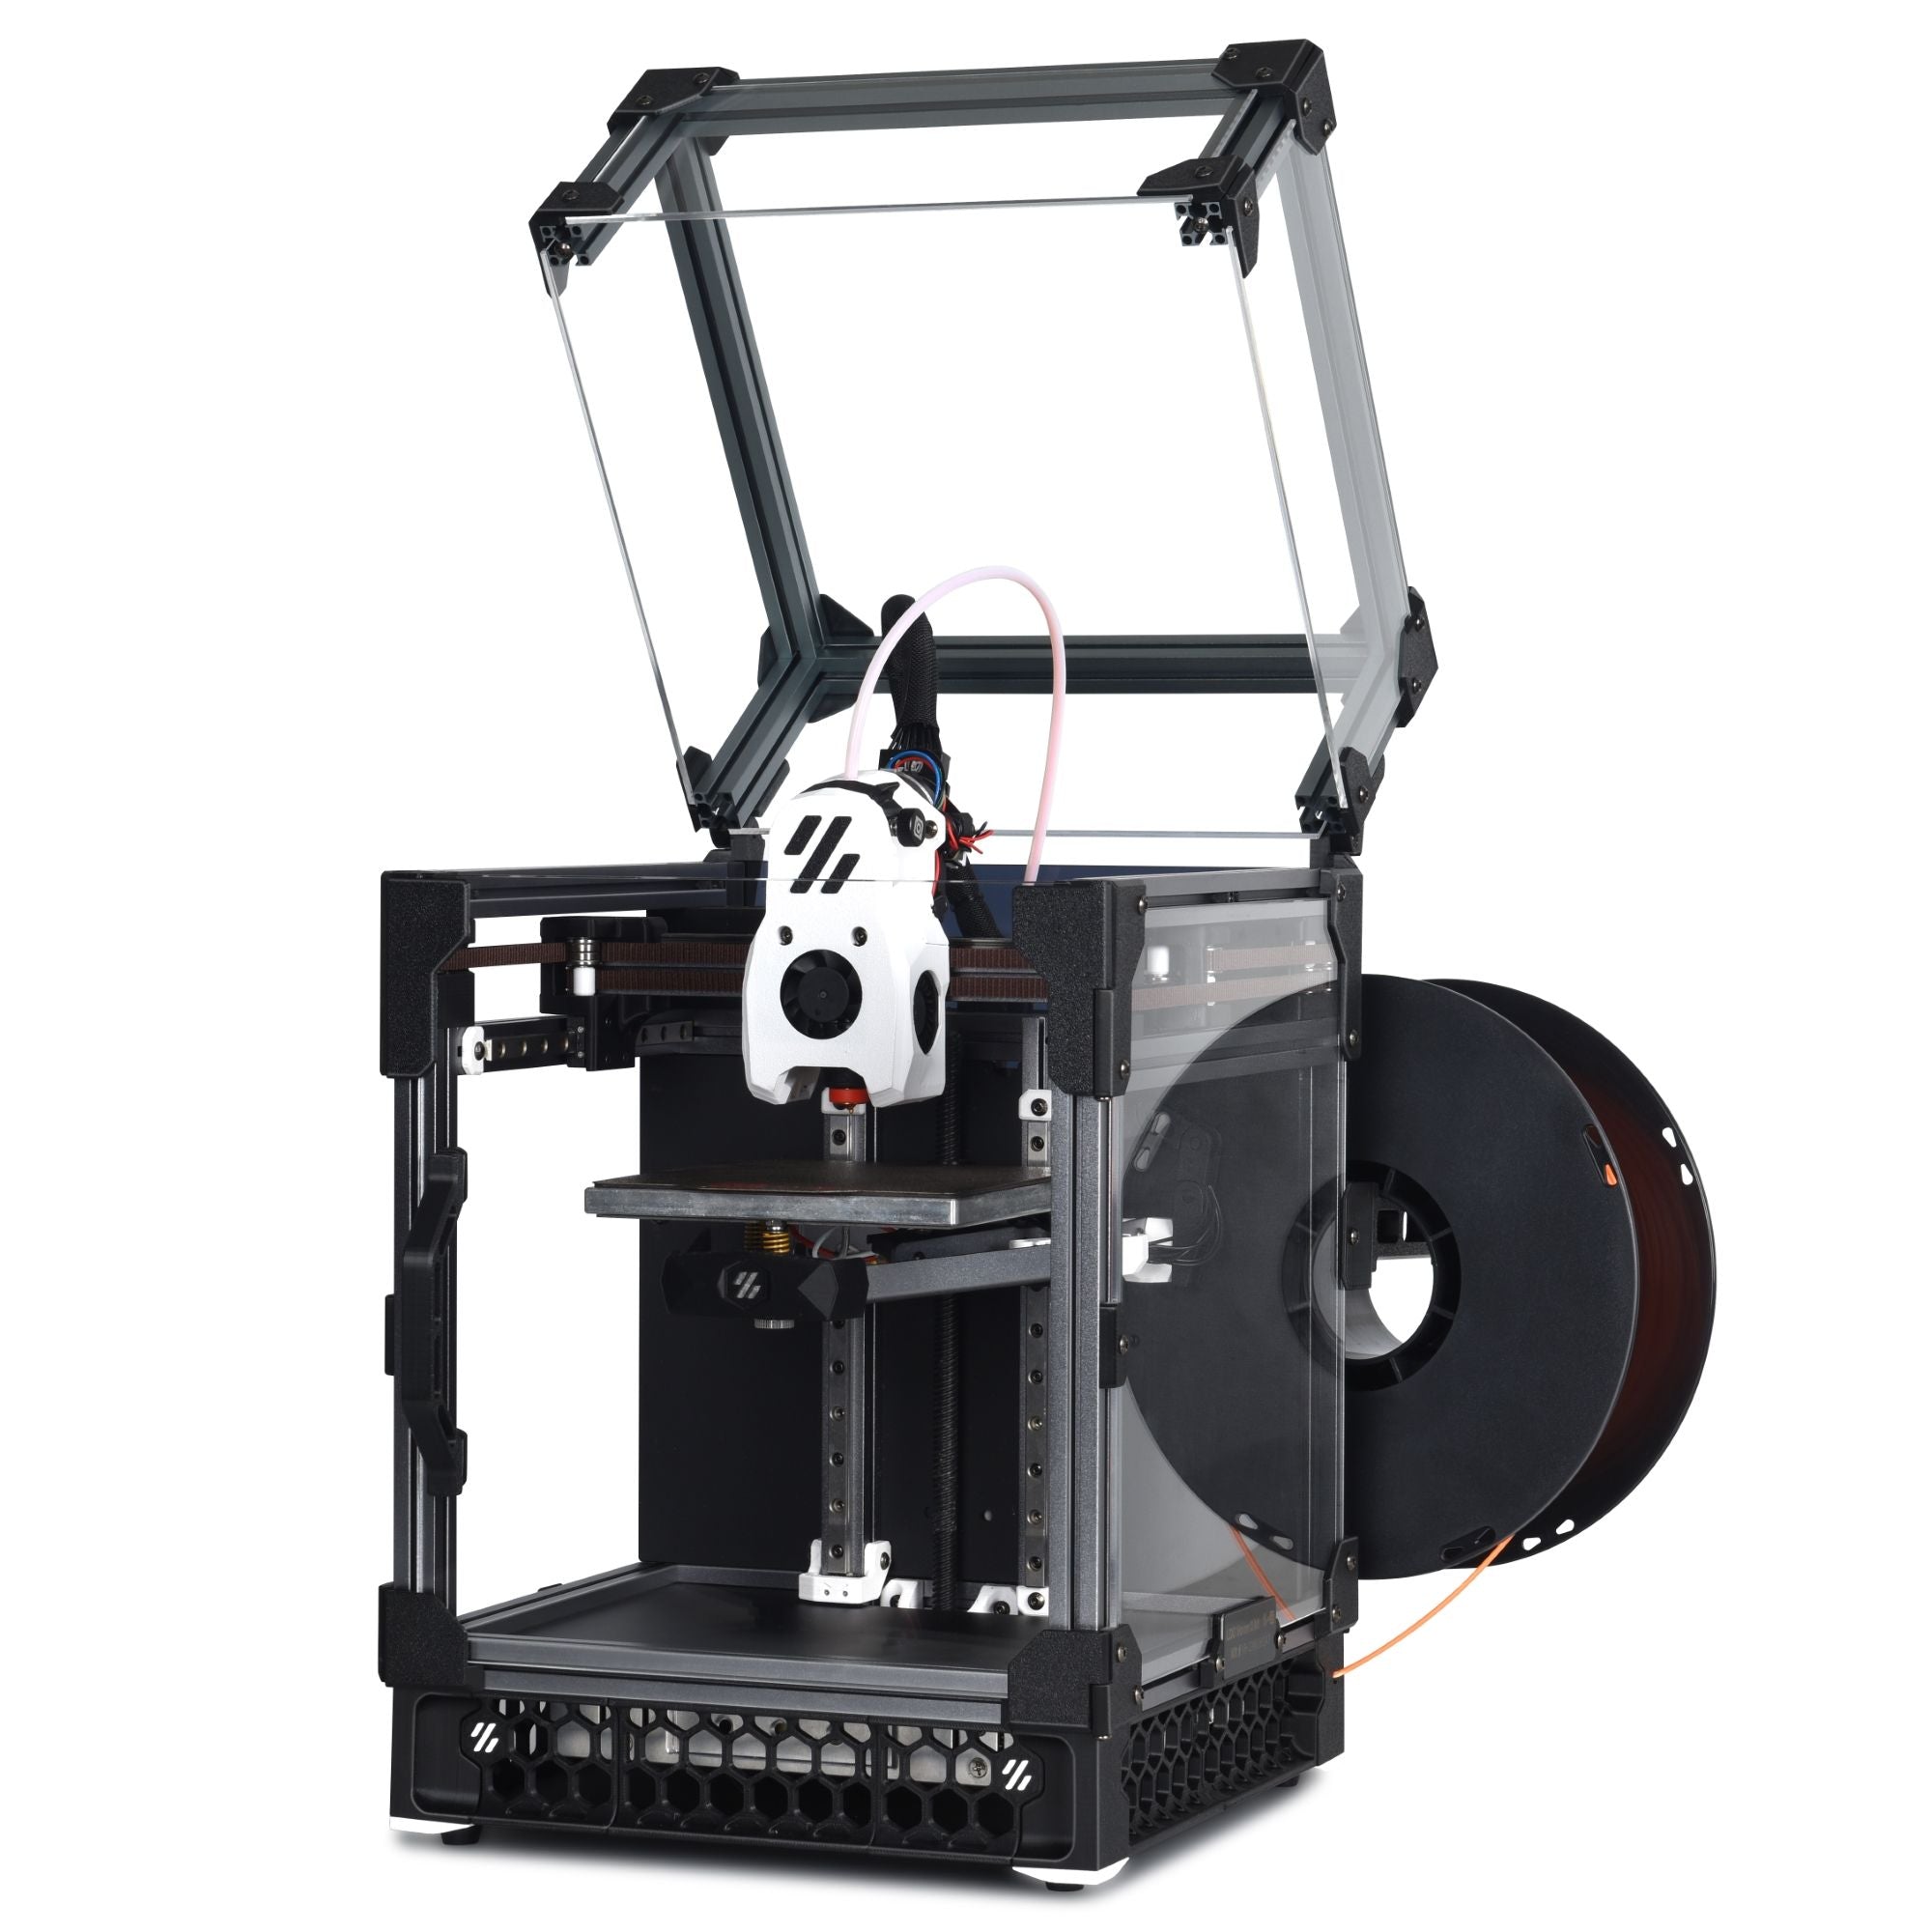 LDO Voron V0.2-S1 A+ 3D Printer Kit